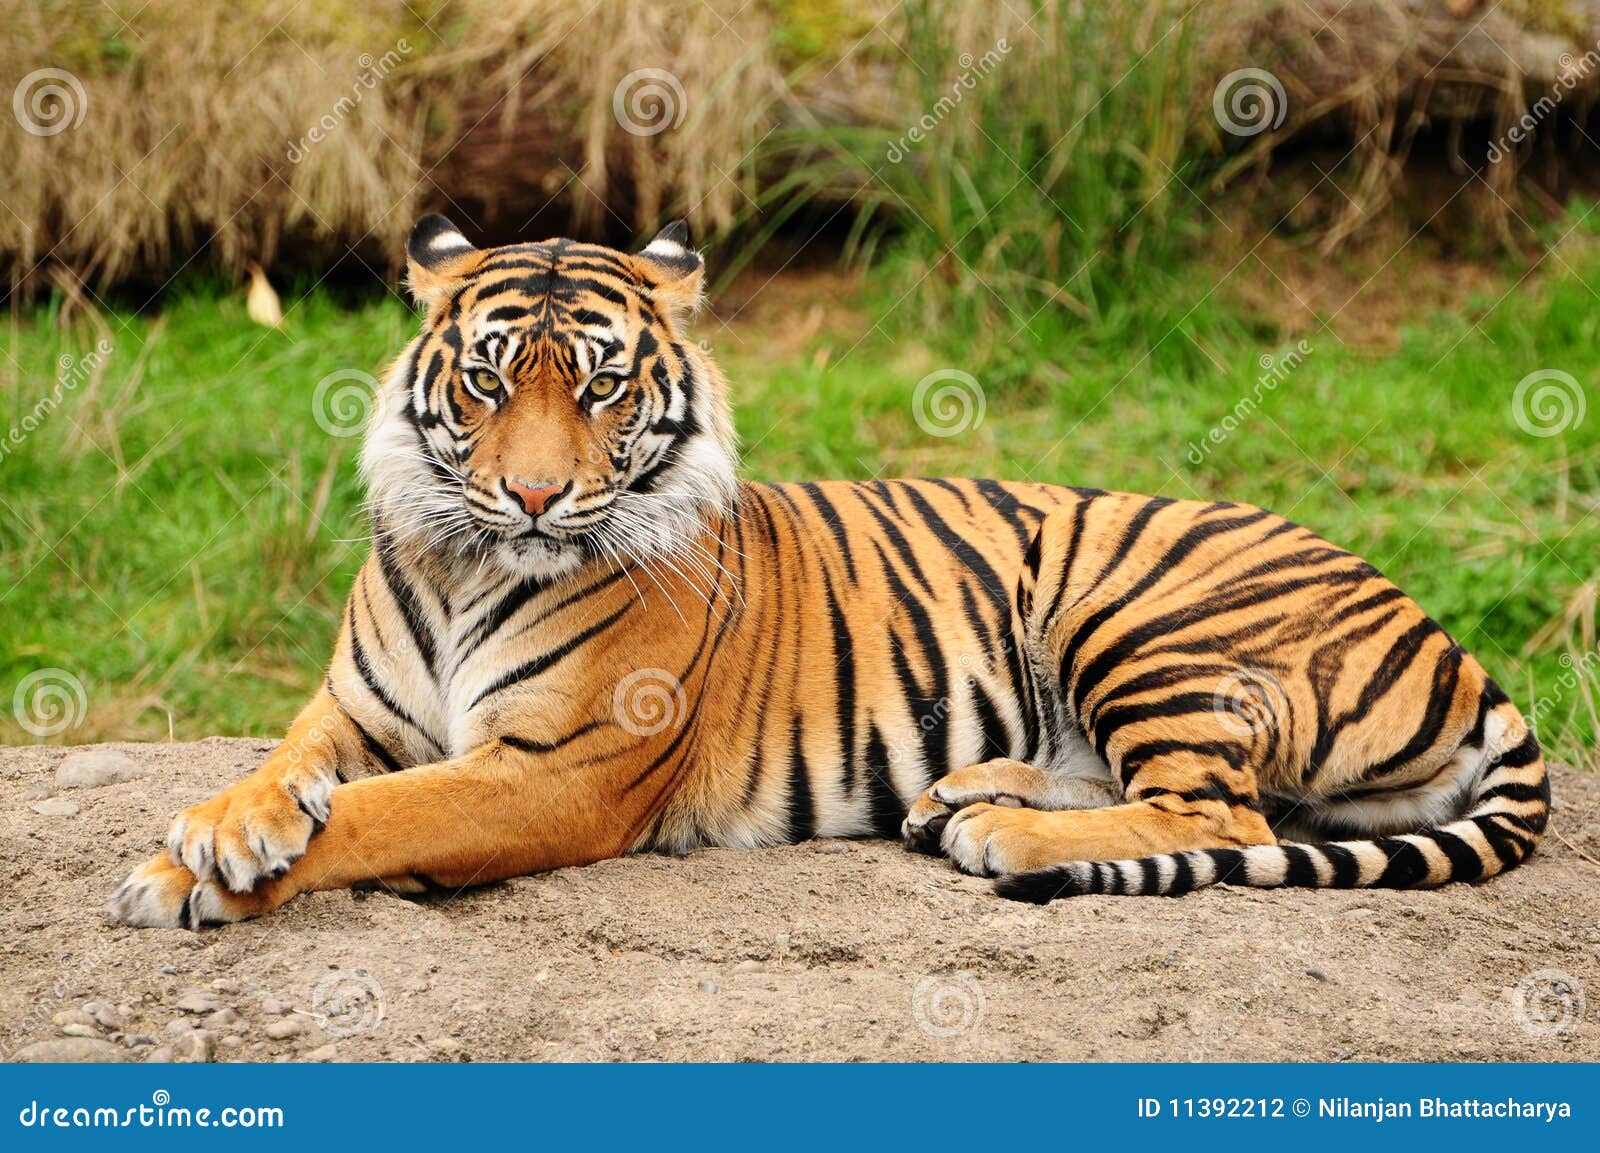 5,283 Bengal Royal Tiger Stock Photos - Free & Royalty-Free Stock